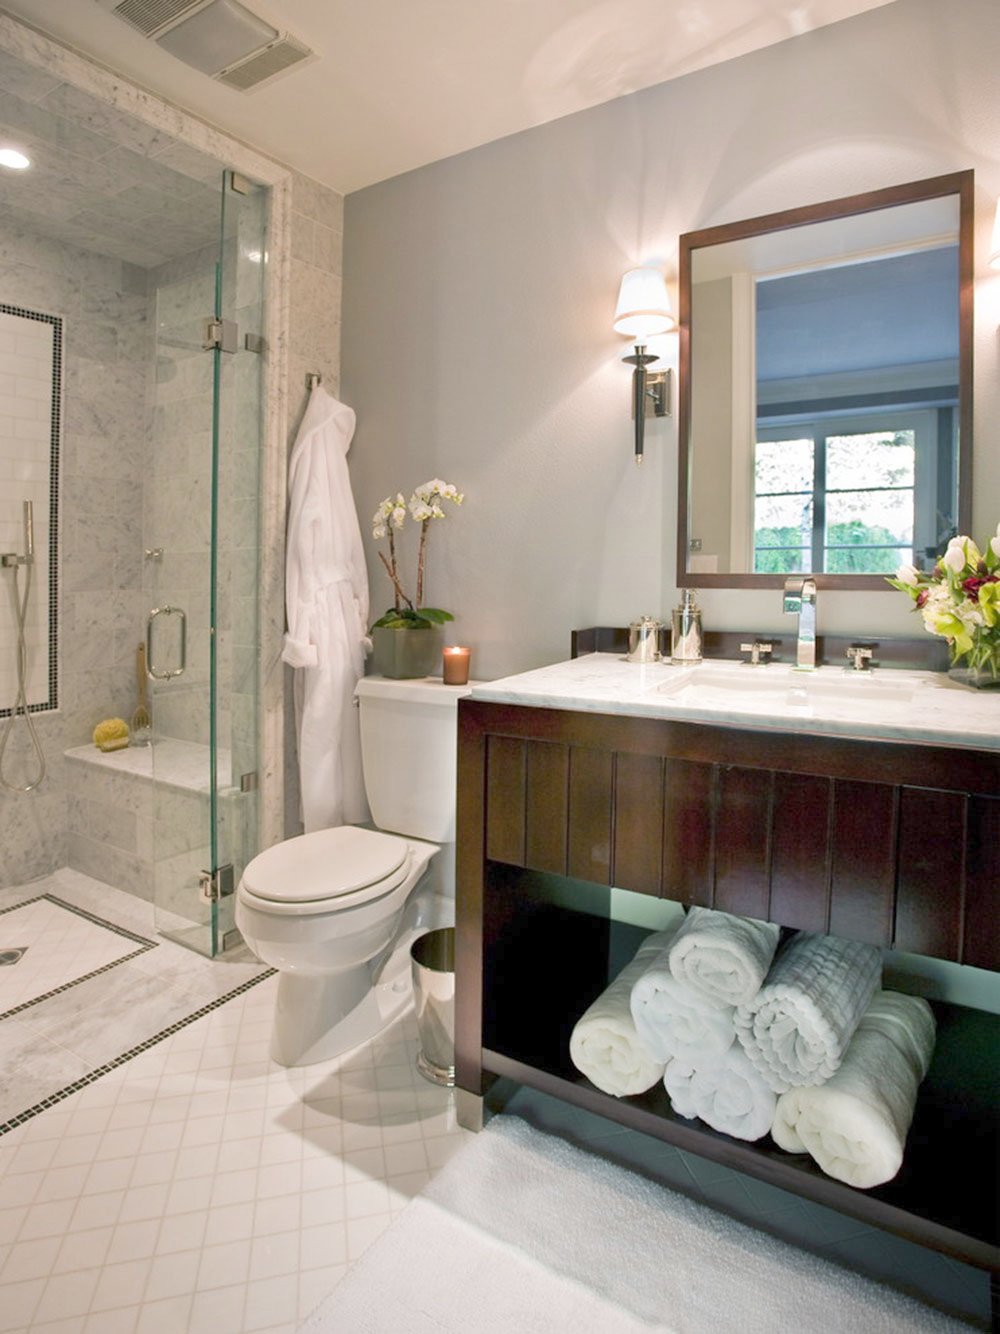 Nice Guest Bathroom Design Modern Bathroom Ideas To Impress Your Guests1 Powder Room Ideas